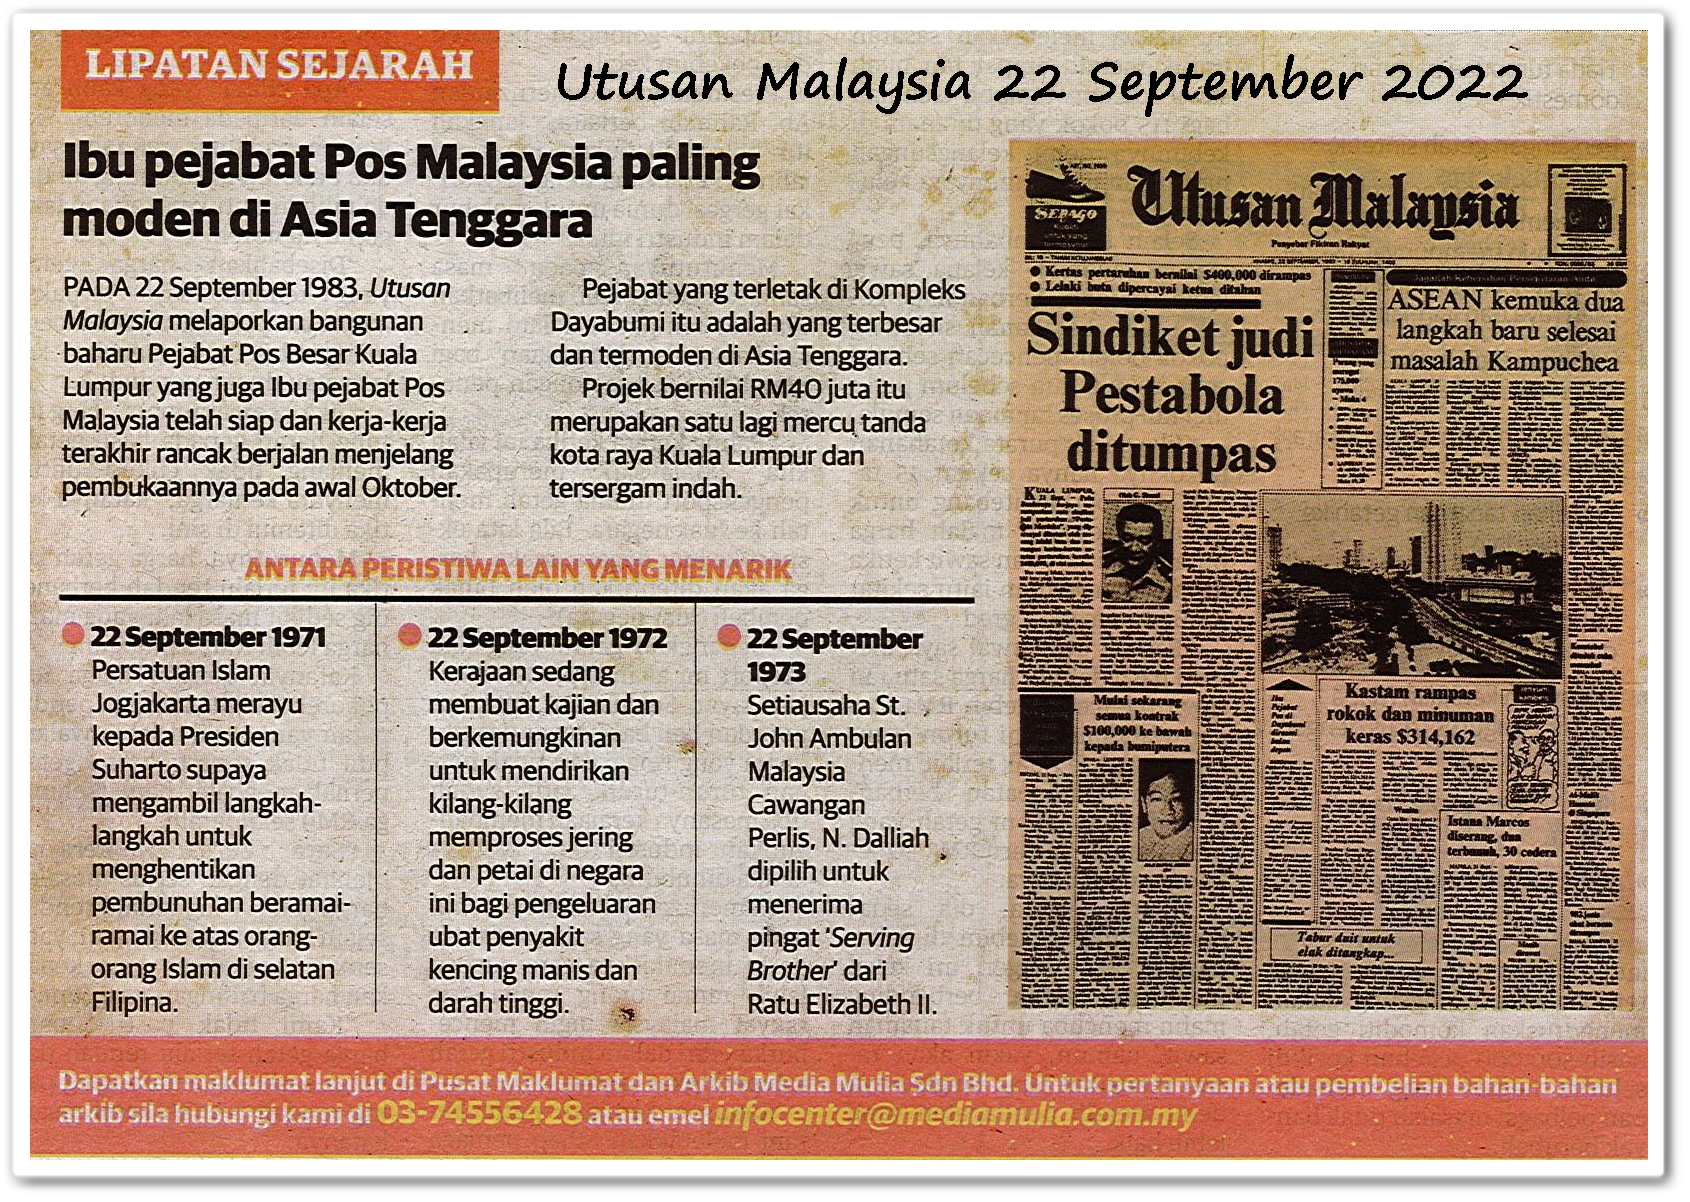 Lipatan sejarah 22 September - Keratan akhbar Utusan Malaysia 22 September 2022